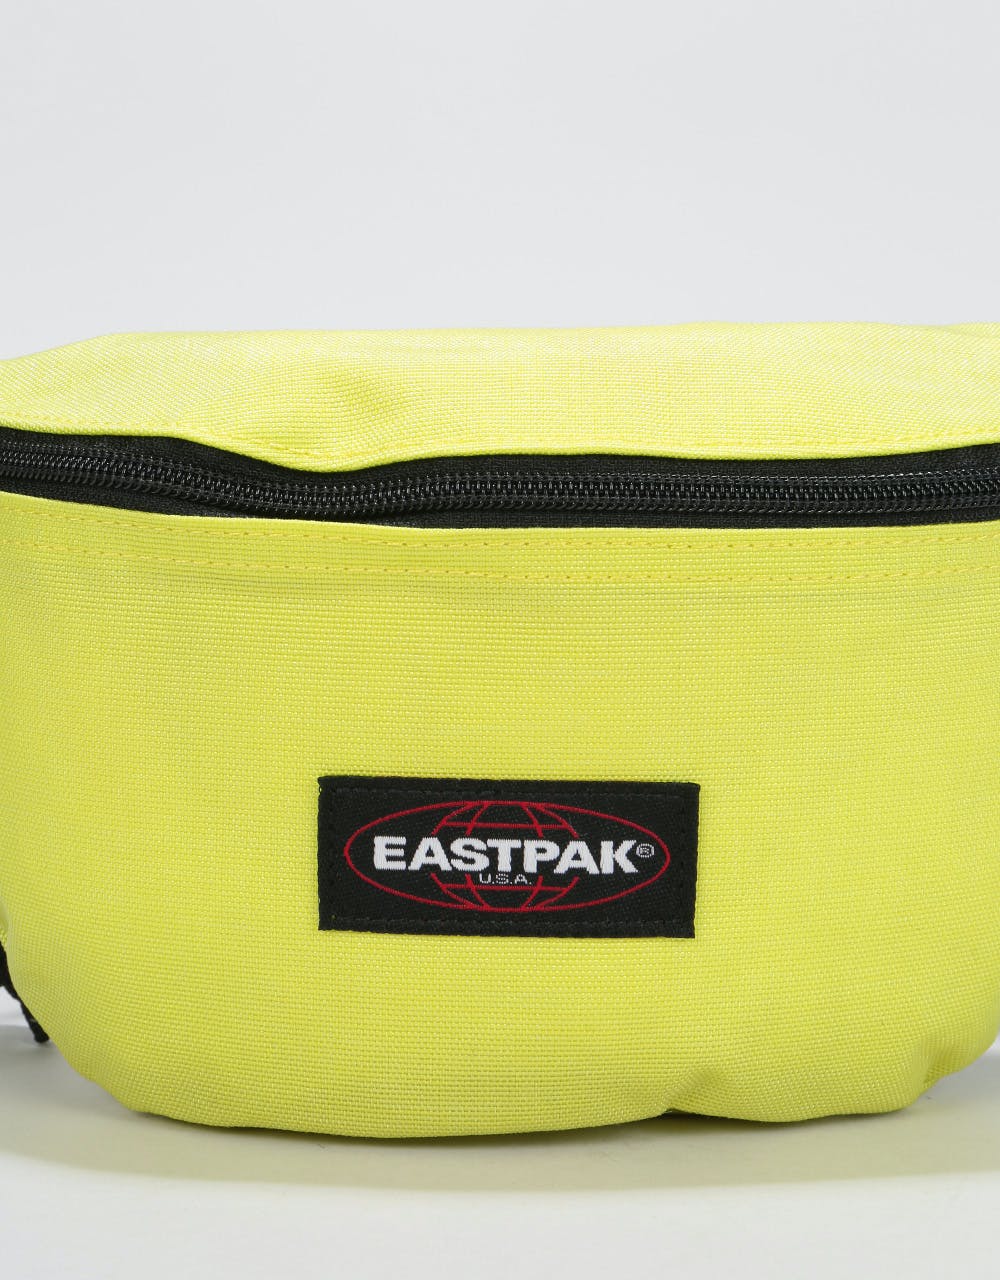 Eastpak Springer Cross Body Bag  - Young Yellow